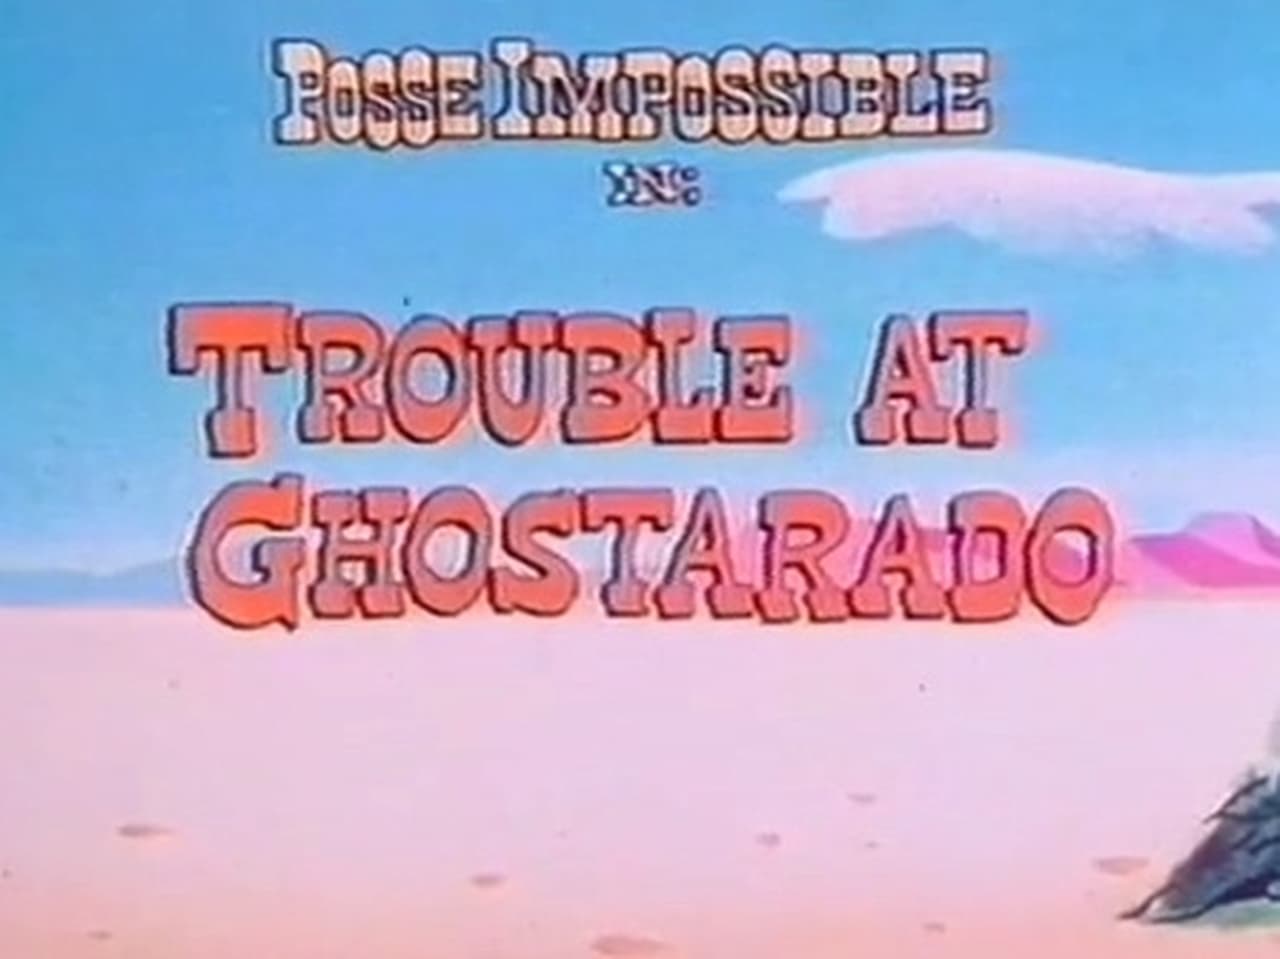 Trouble at Ghostarado